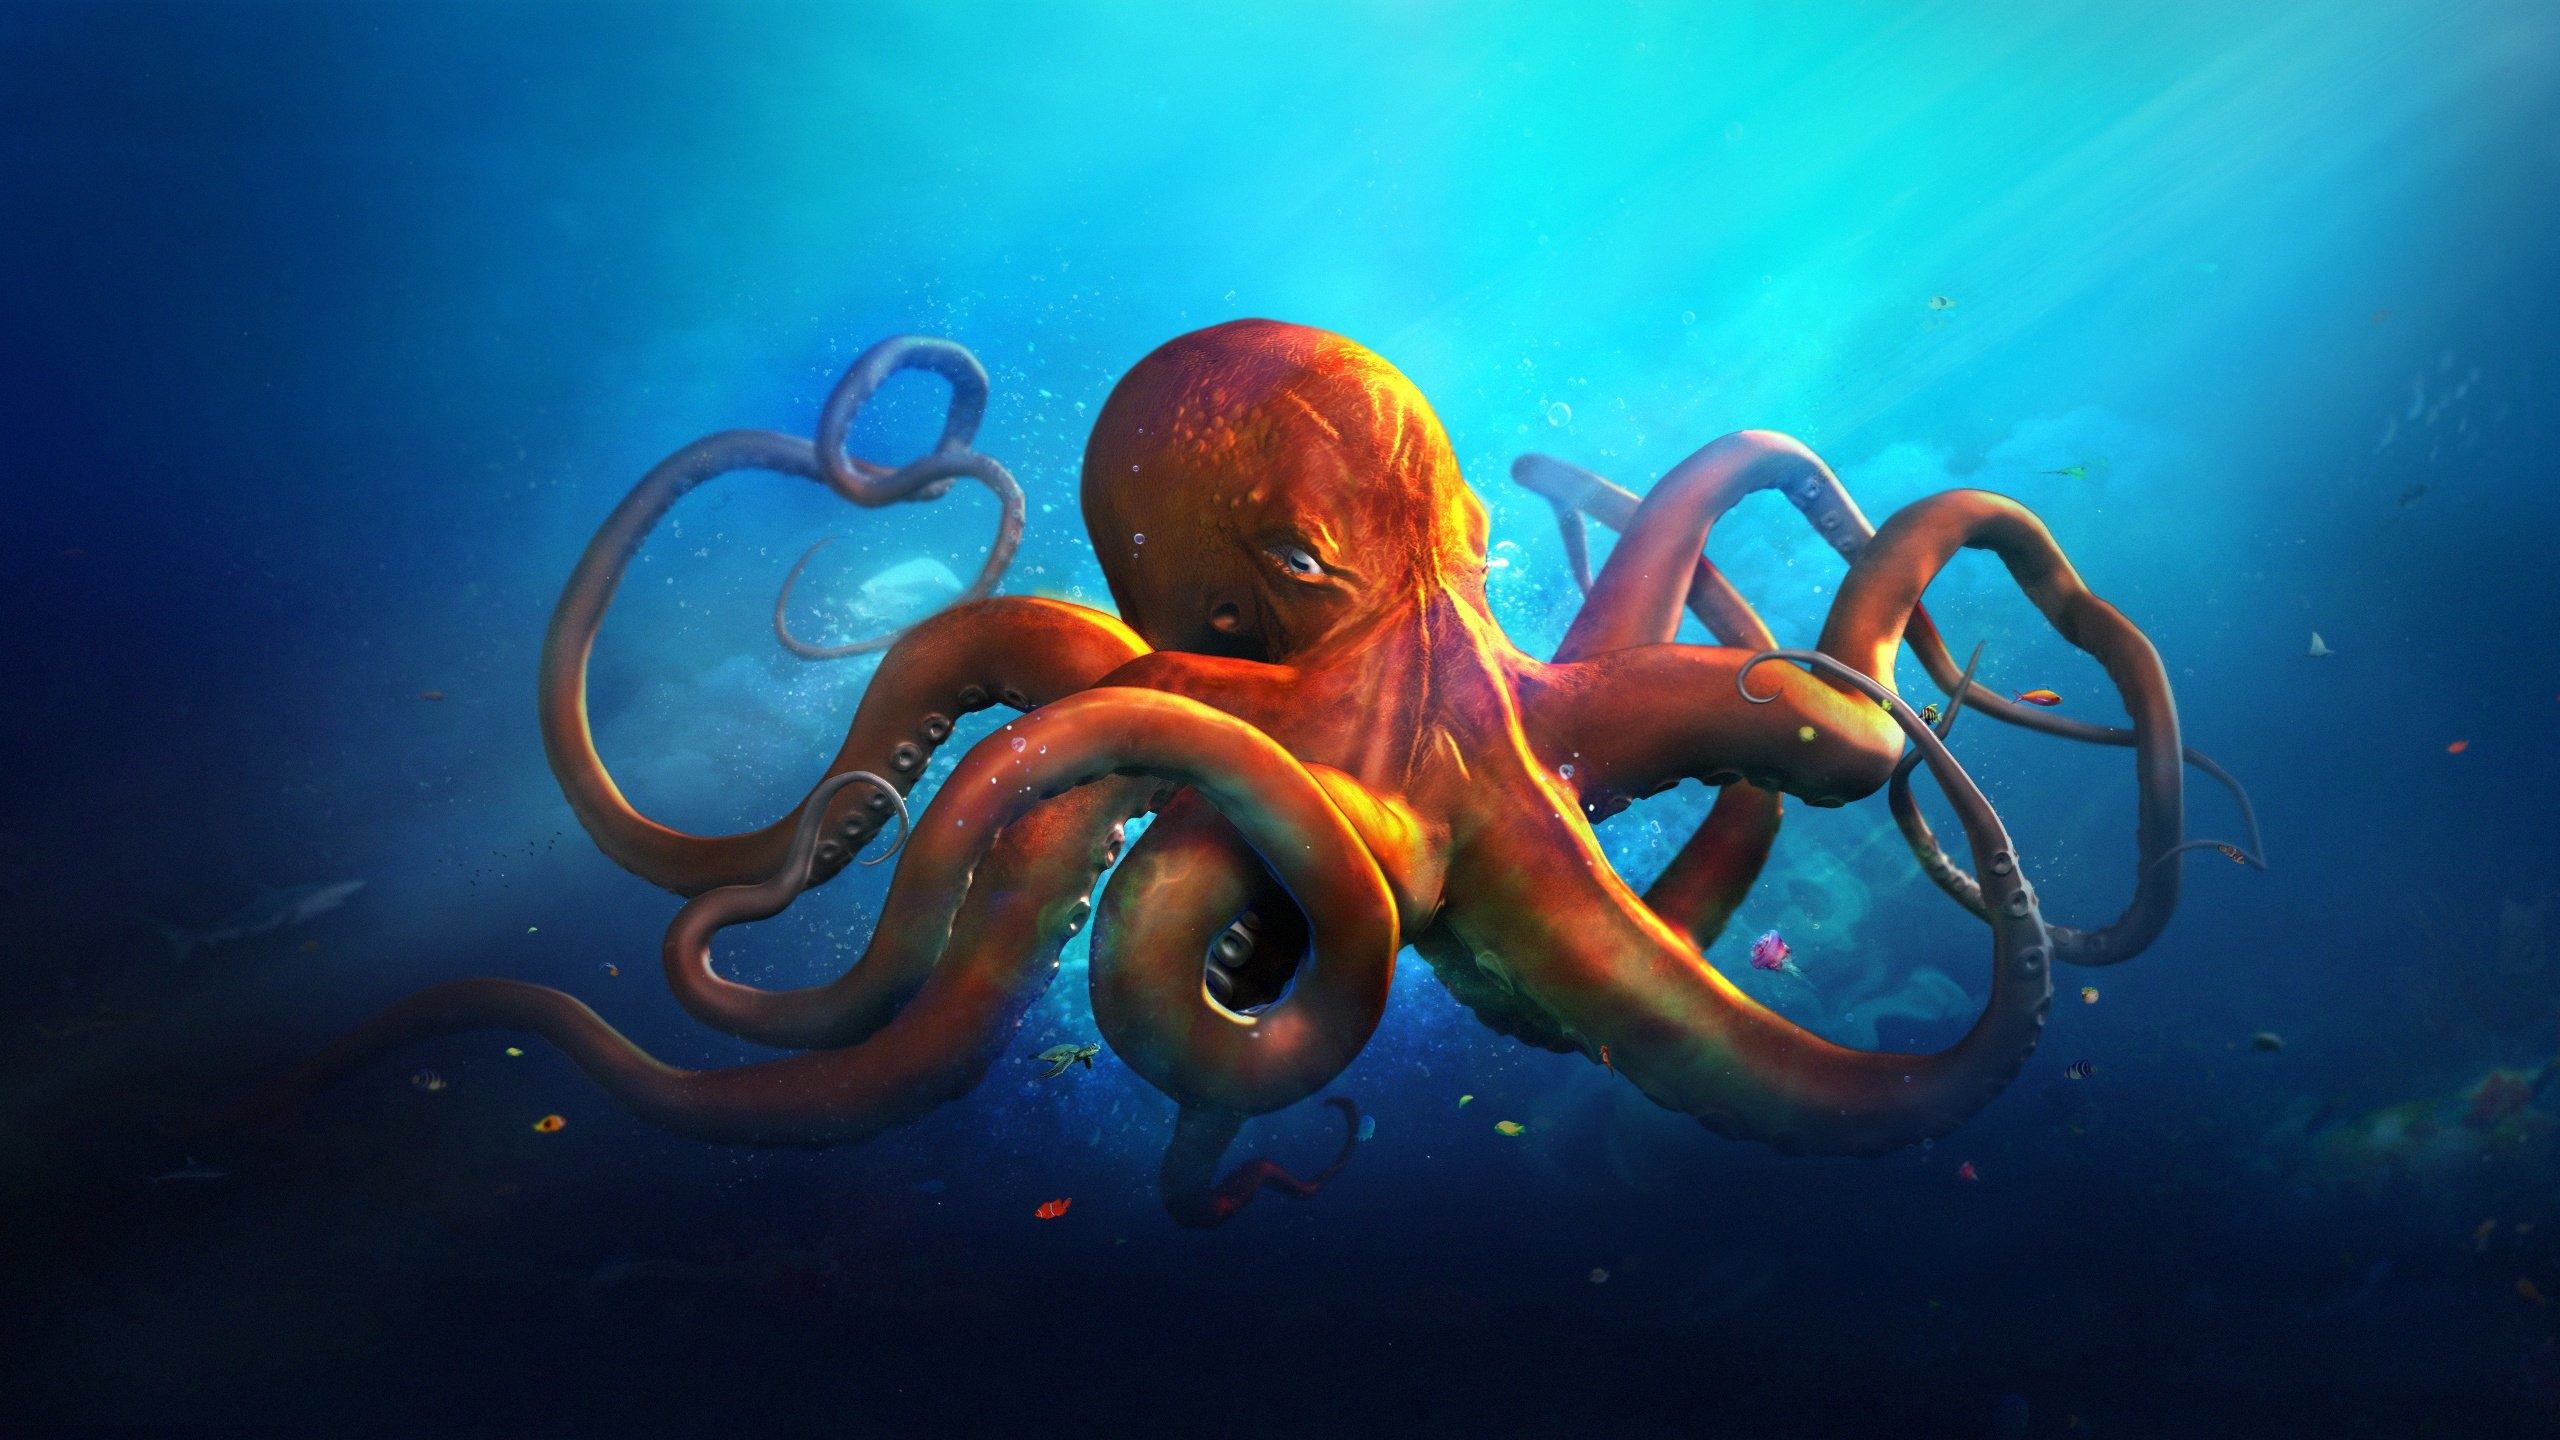 2560x1440 Animals octopus ocean sea fantasy artwork art wallpaper background .